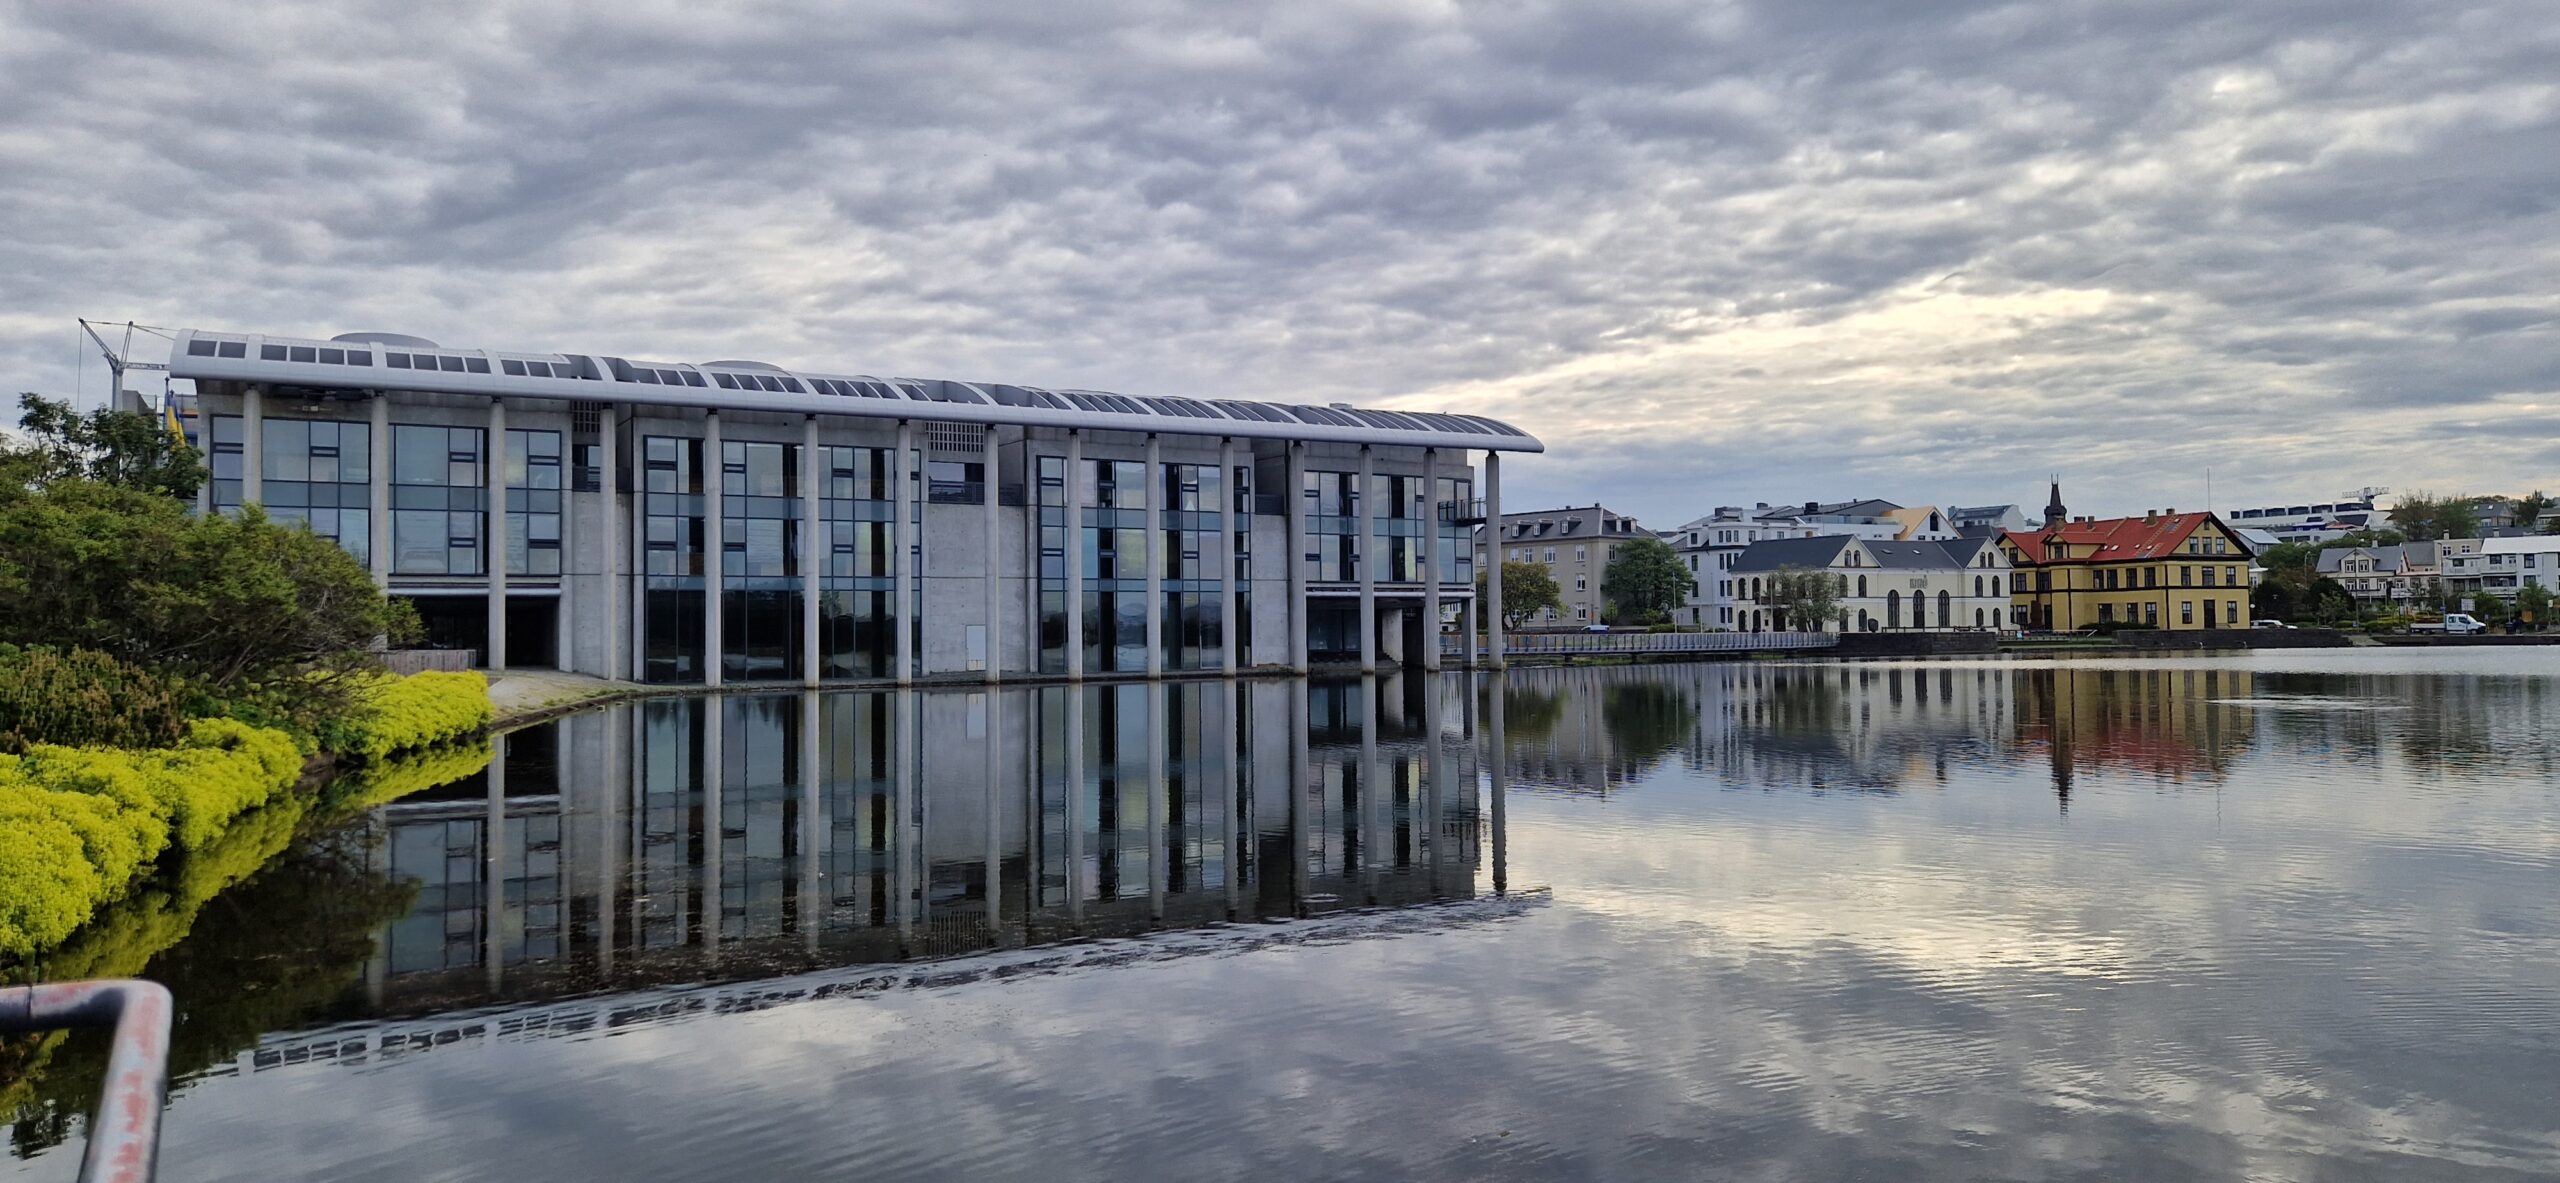 Reykjavik Pond City Hall